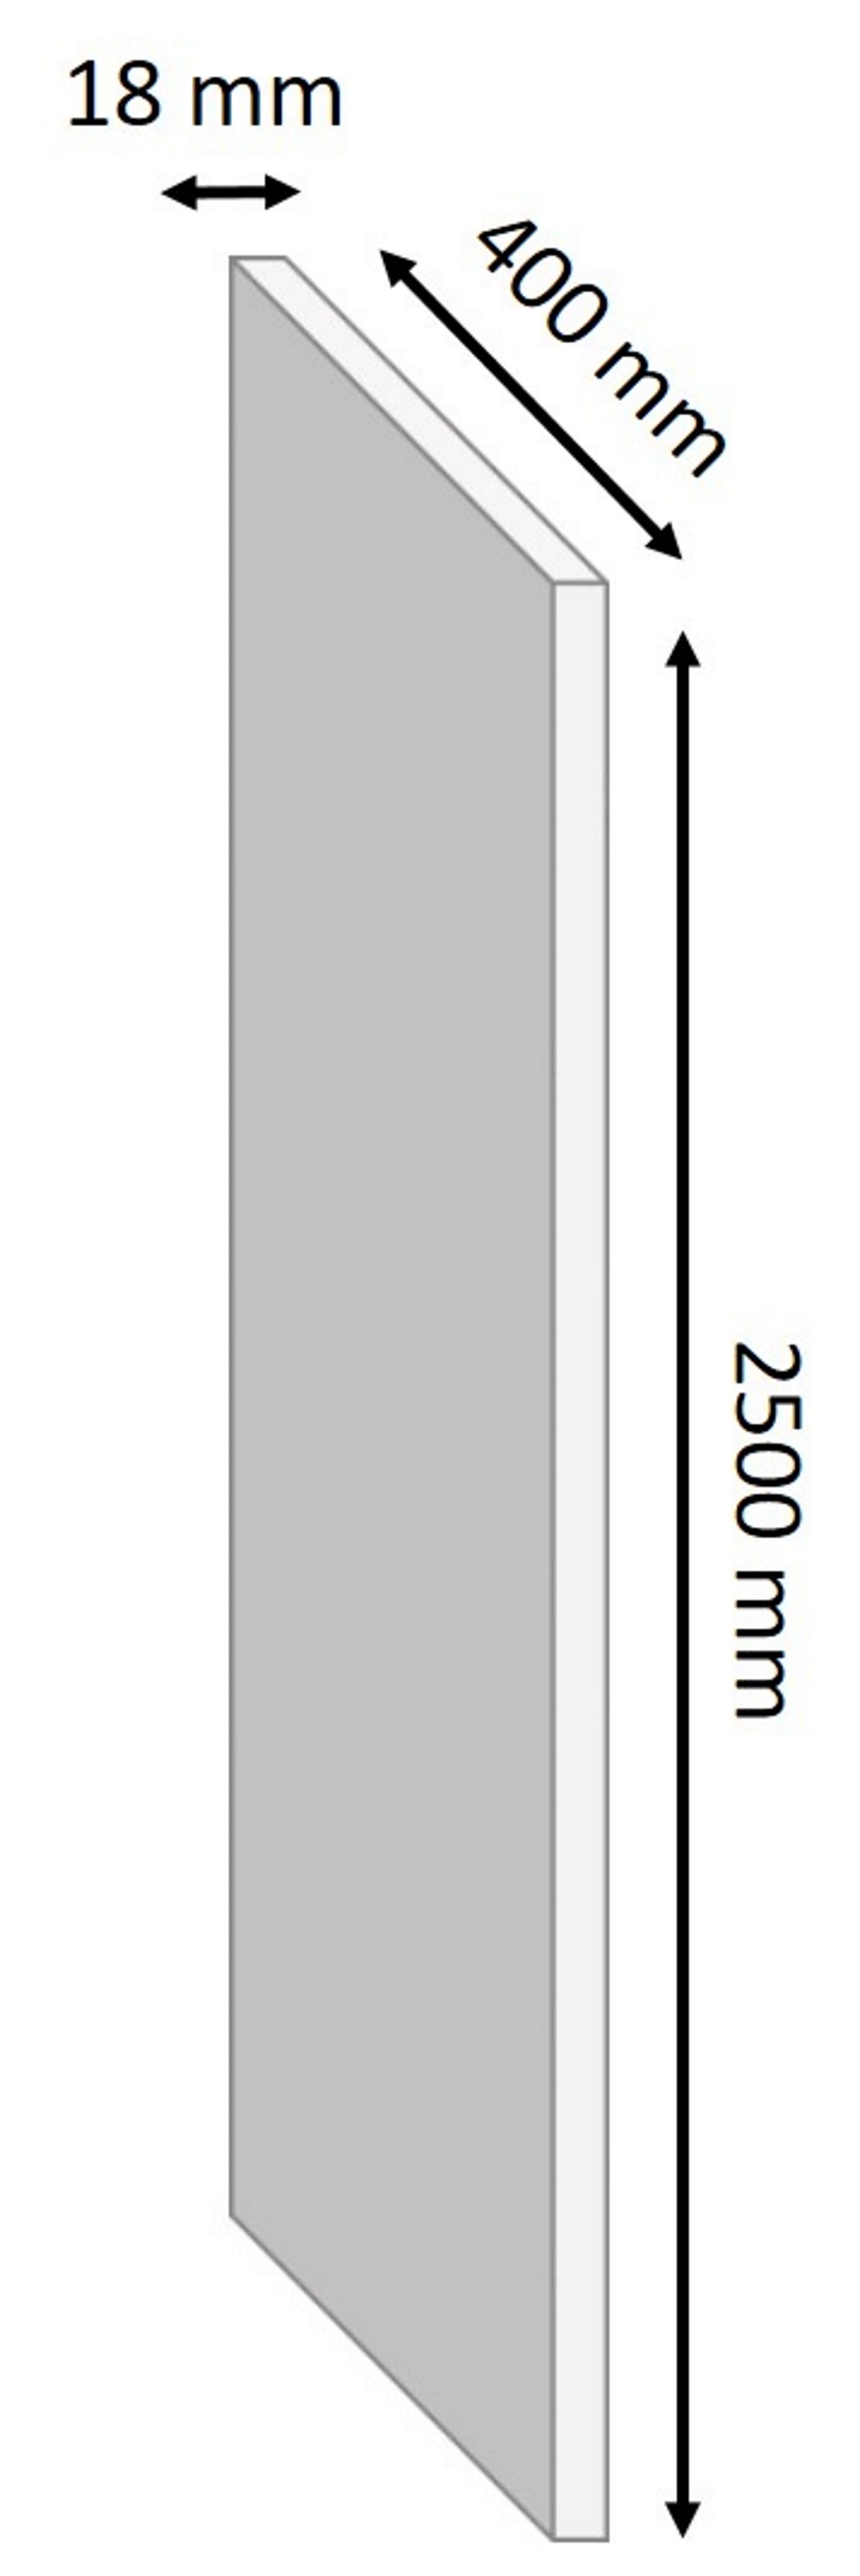 White Semi edged Melamine-faced chipboard (MFC) Furniture board, (L)2.5m (W)400mm (T)18mm